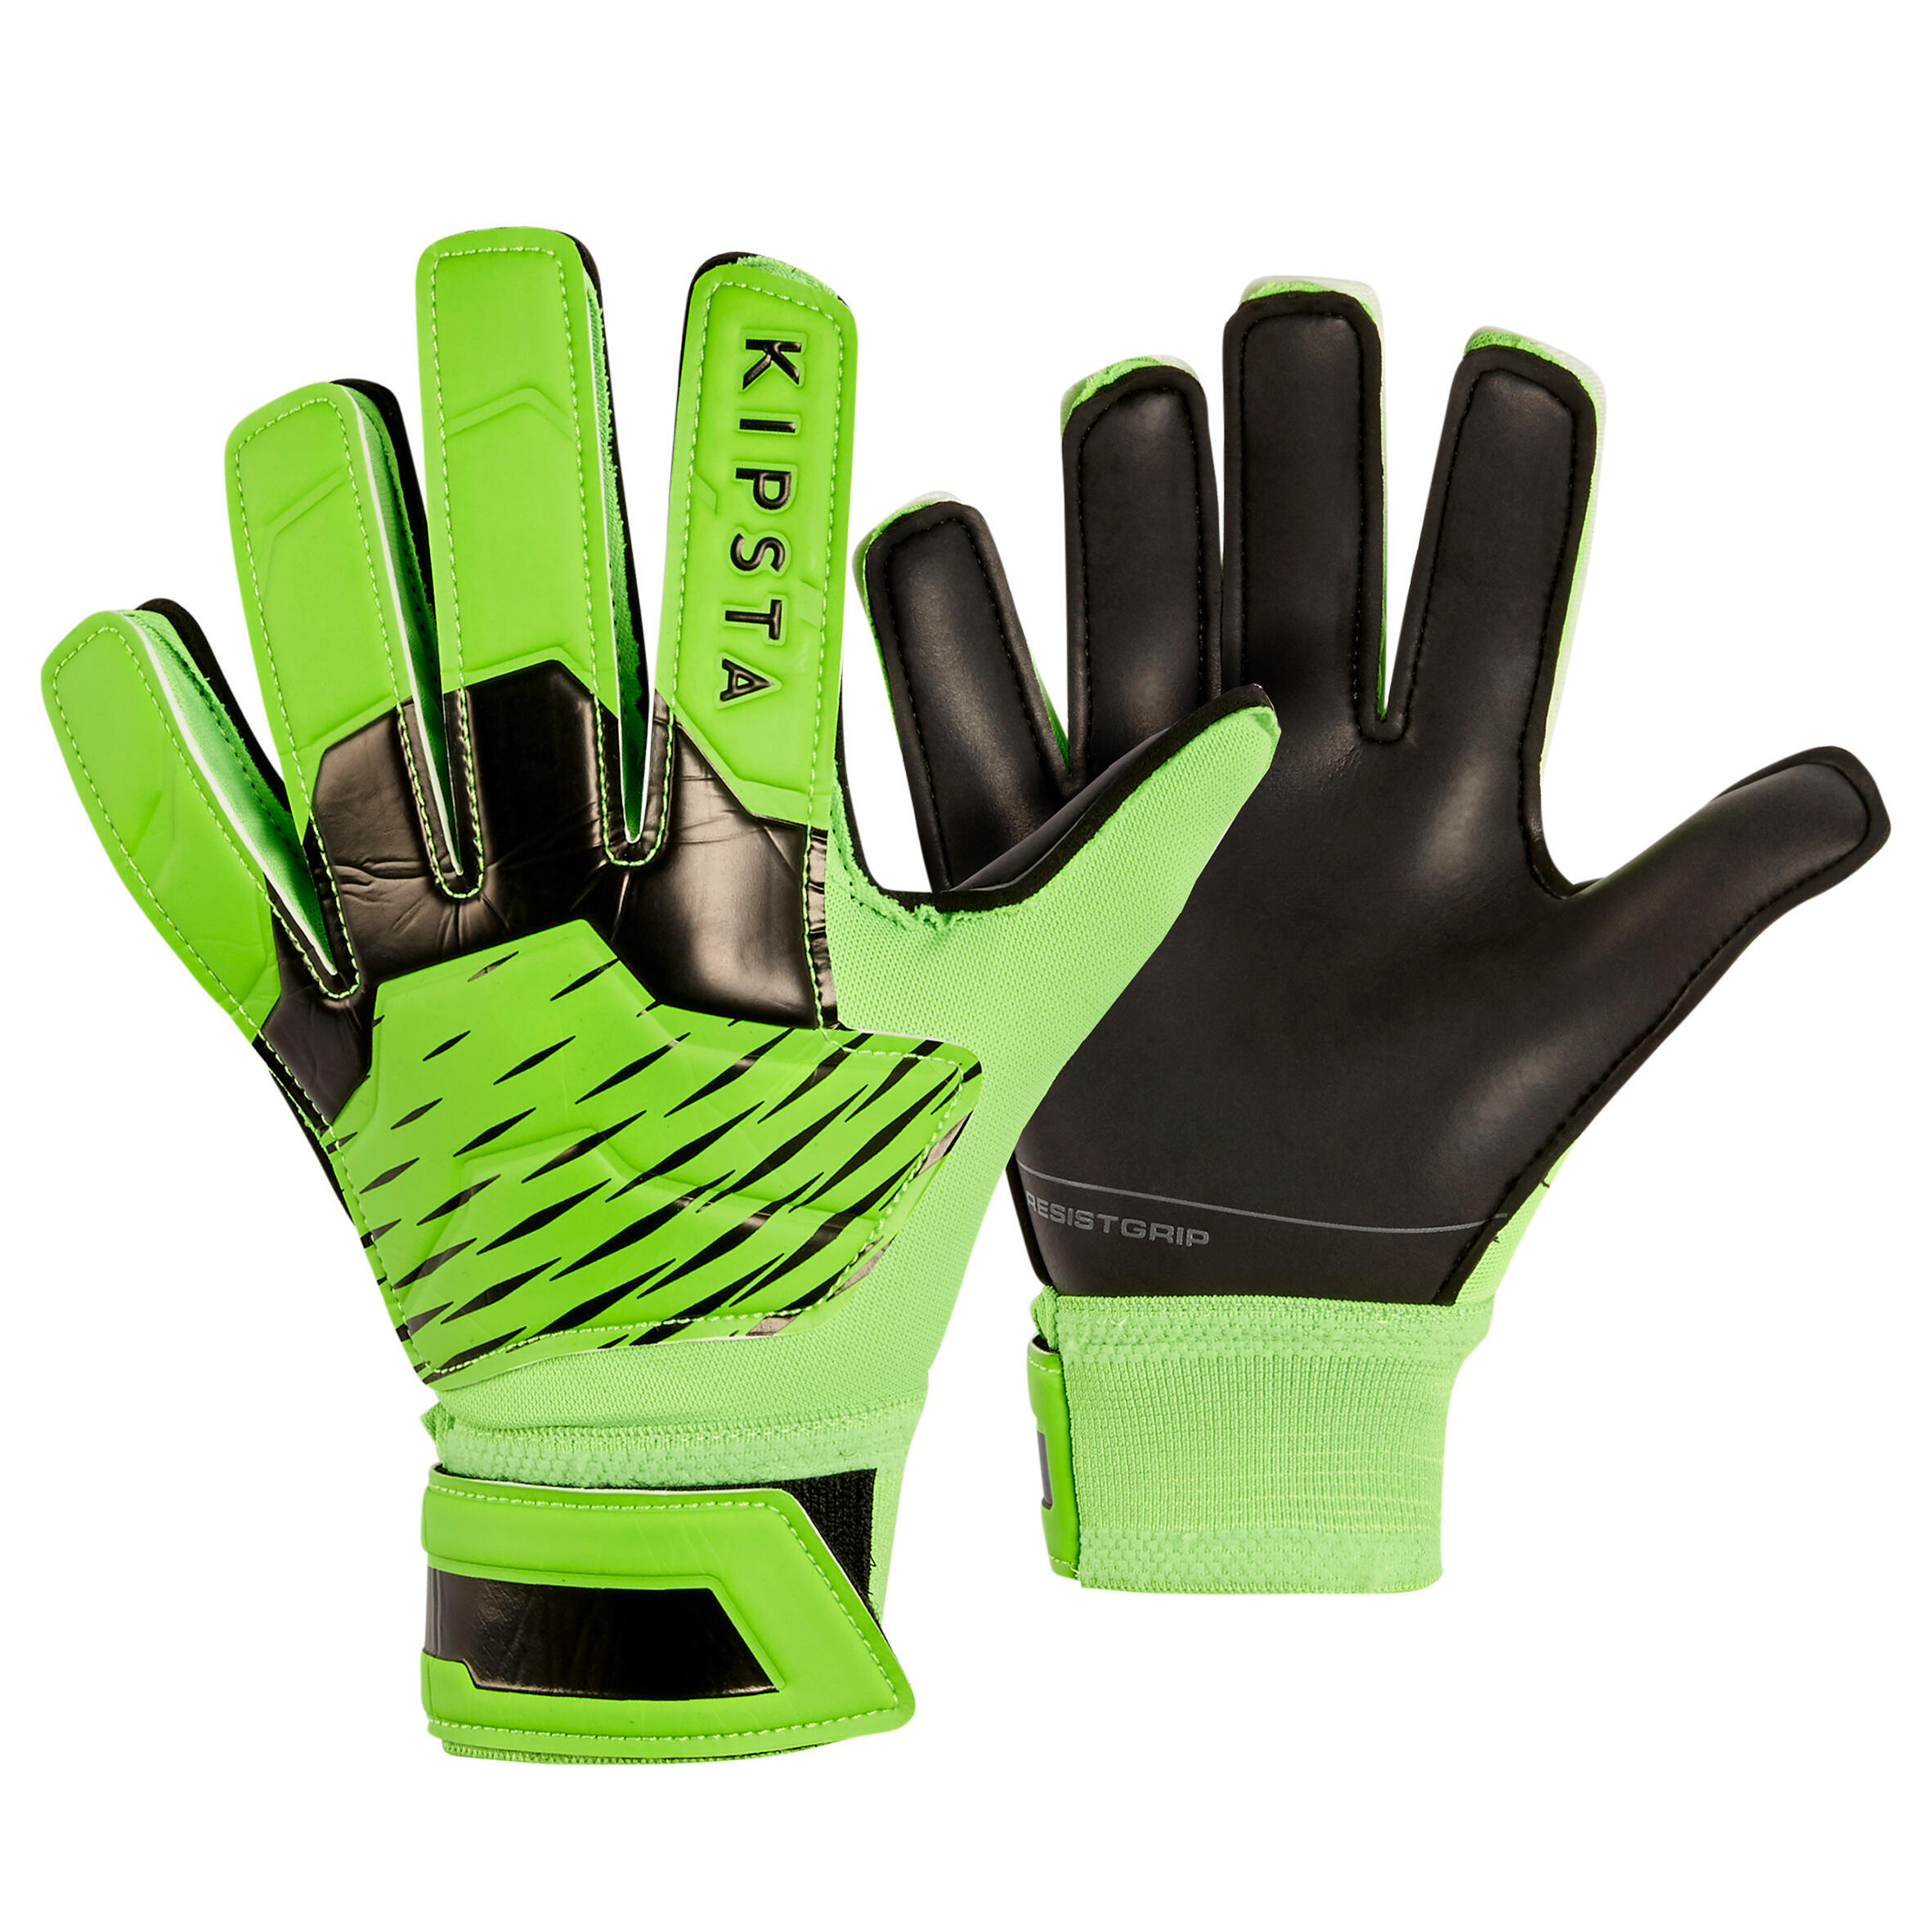 Kids' Football Goalkeeper Gloves F100 Resist - Green/Black 1/4